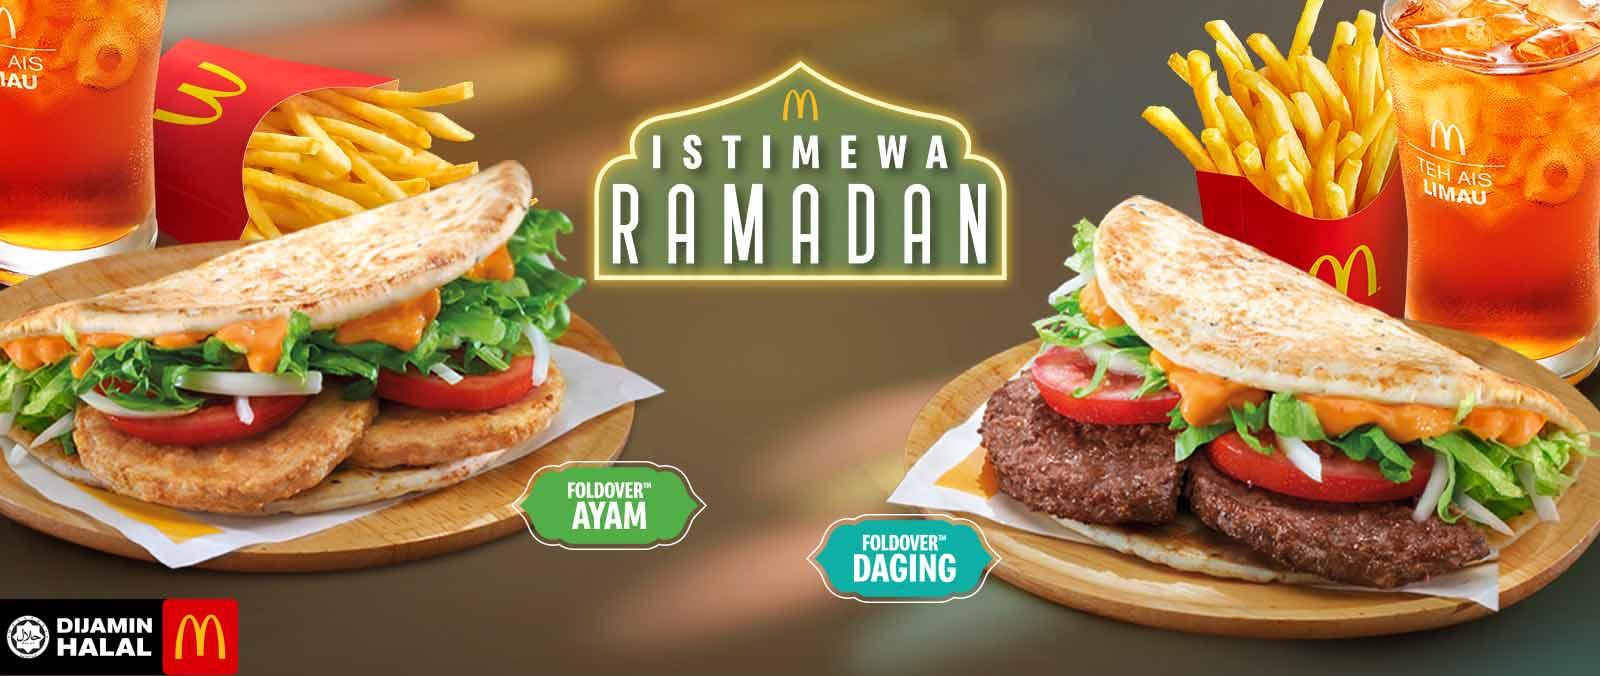 Istimewa Ramadan's image'